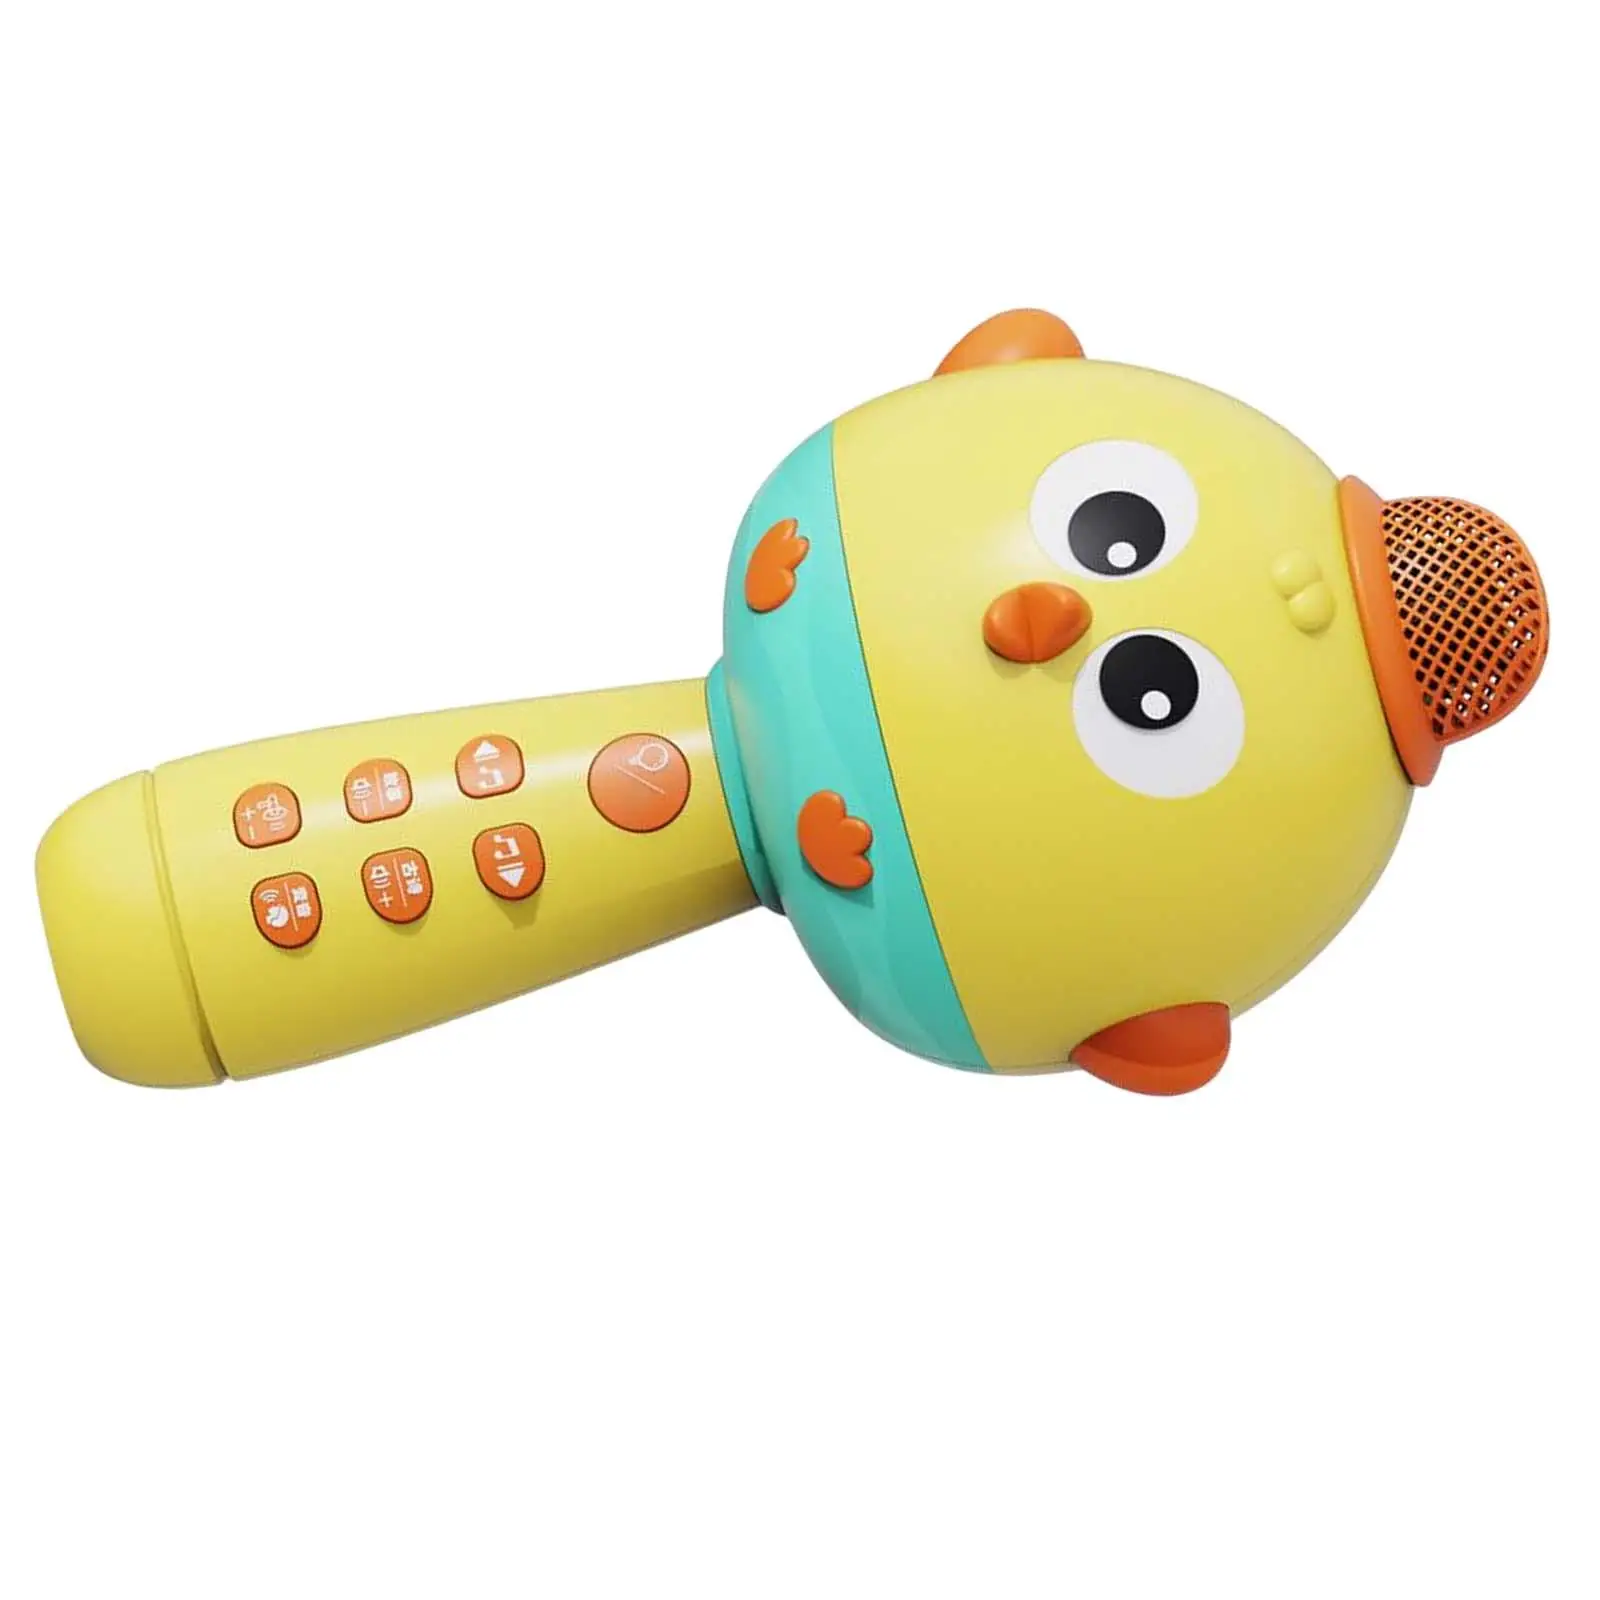 Kids karaoke microphones Machine Toy Adjustable for Practice Party Gathering